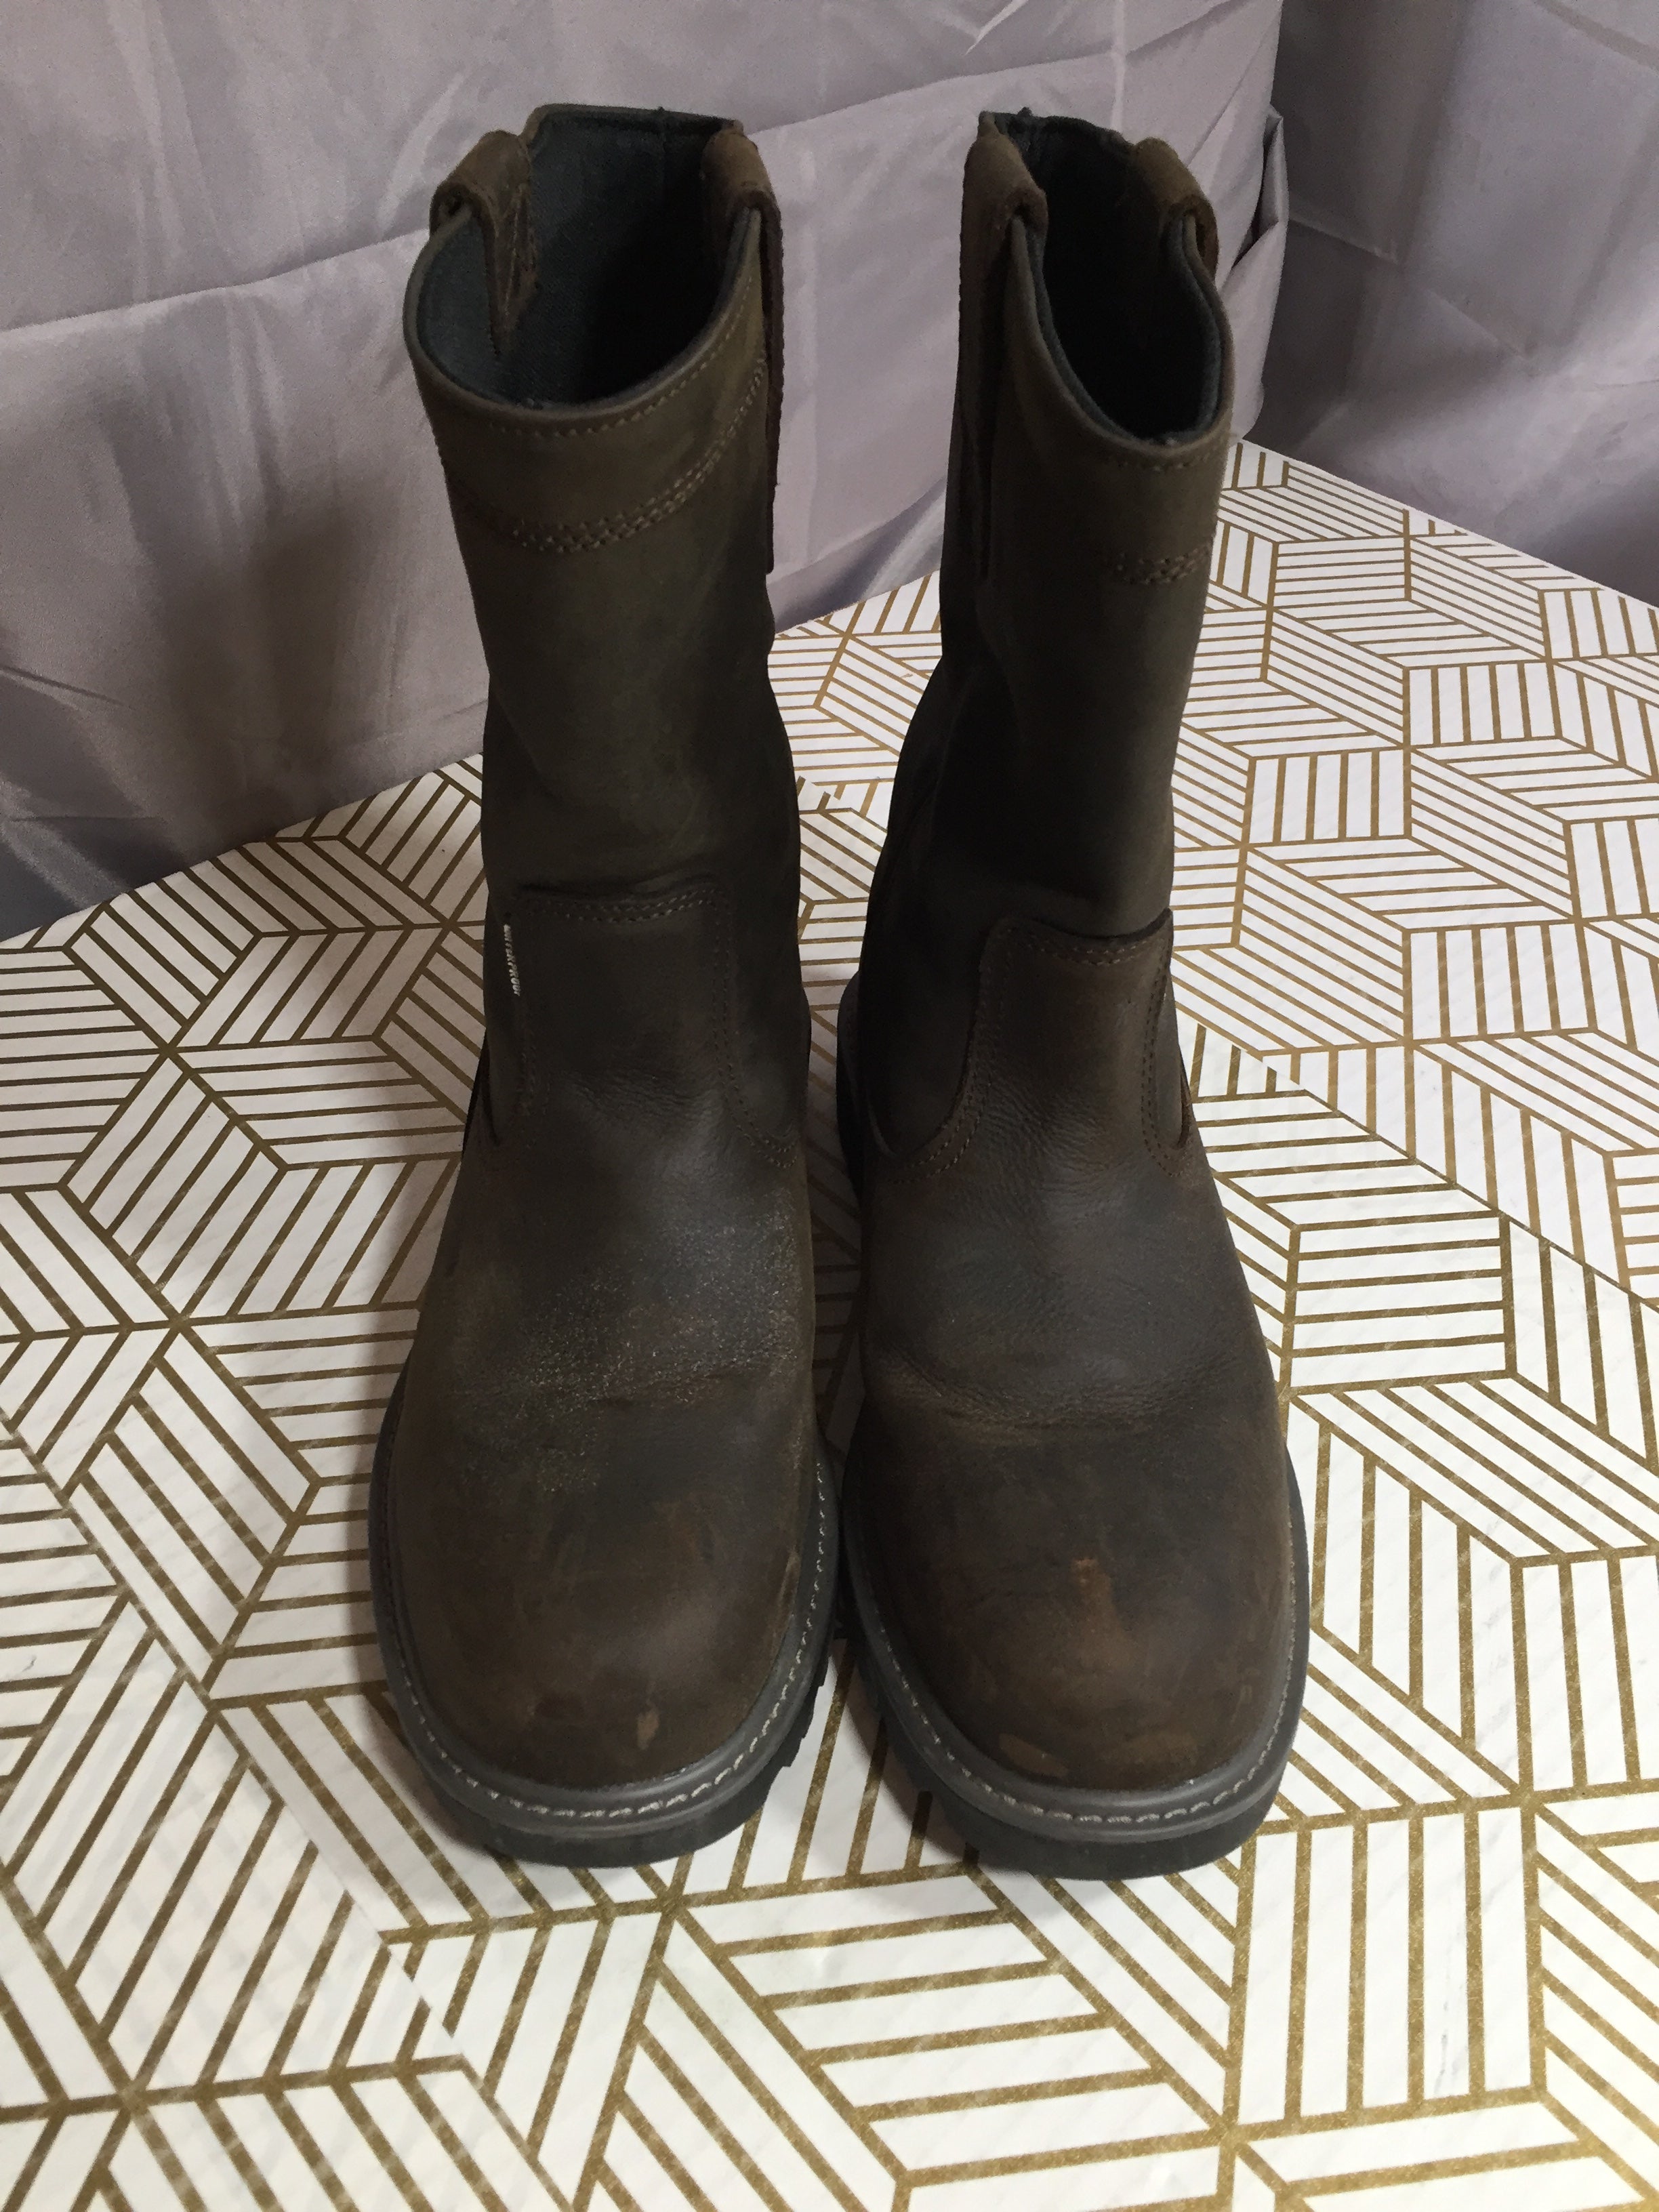 WOLVERINE Men's Work Boot Steel-Toe US Size 12 (F2413-18) (8072615461102)